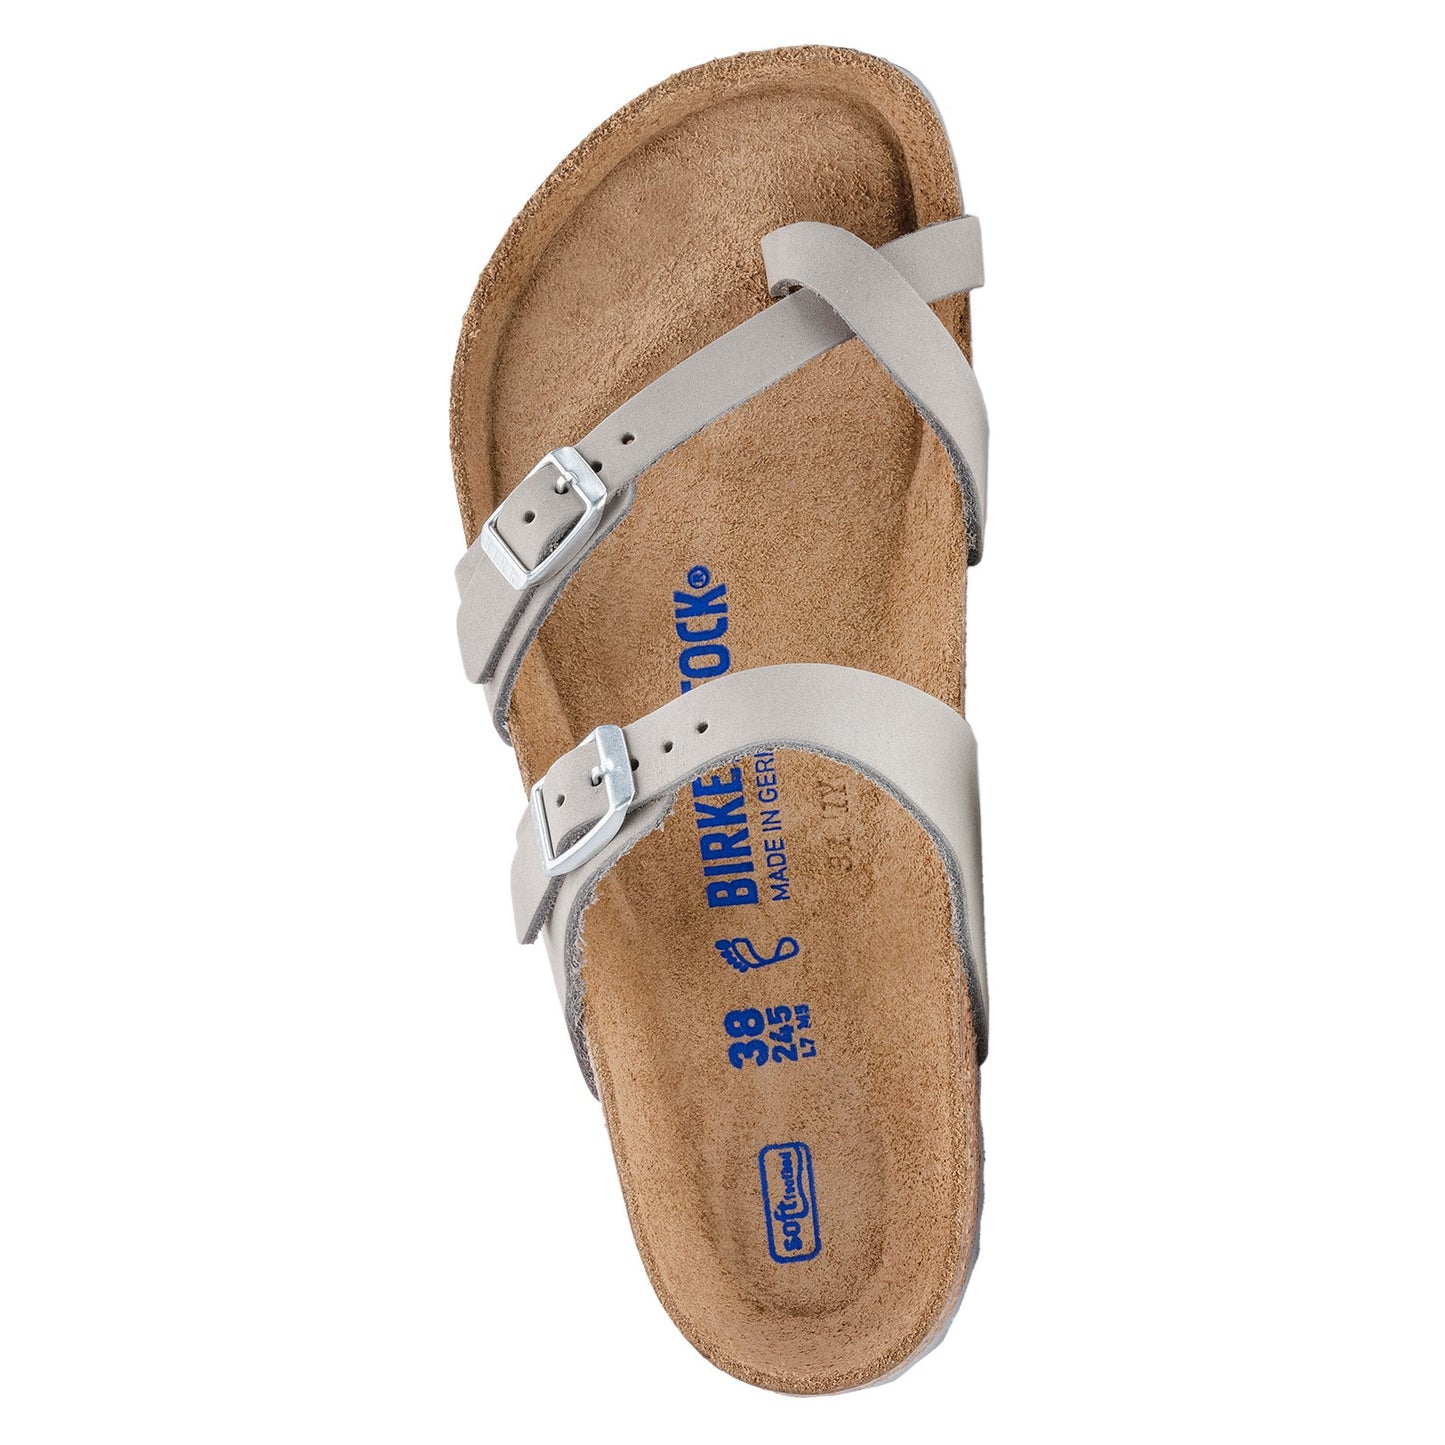 Peltz Shoes  Women's Birkenstock Mayari Soft Footbed Sandal - Regular Fit DOVE 1023 577 R